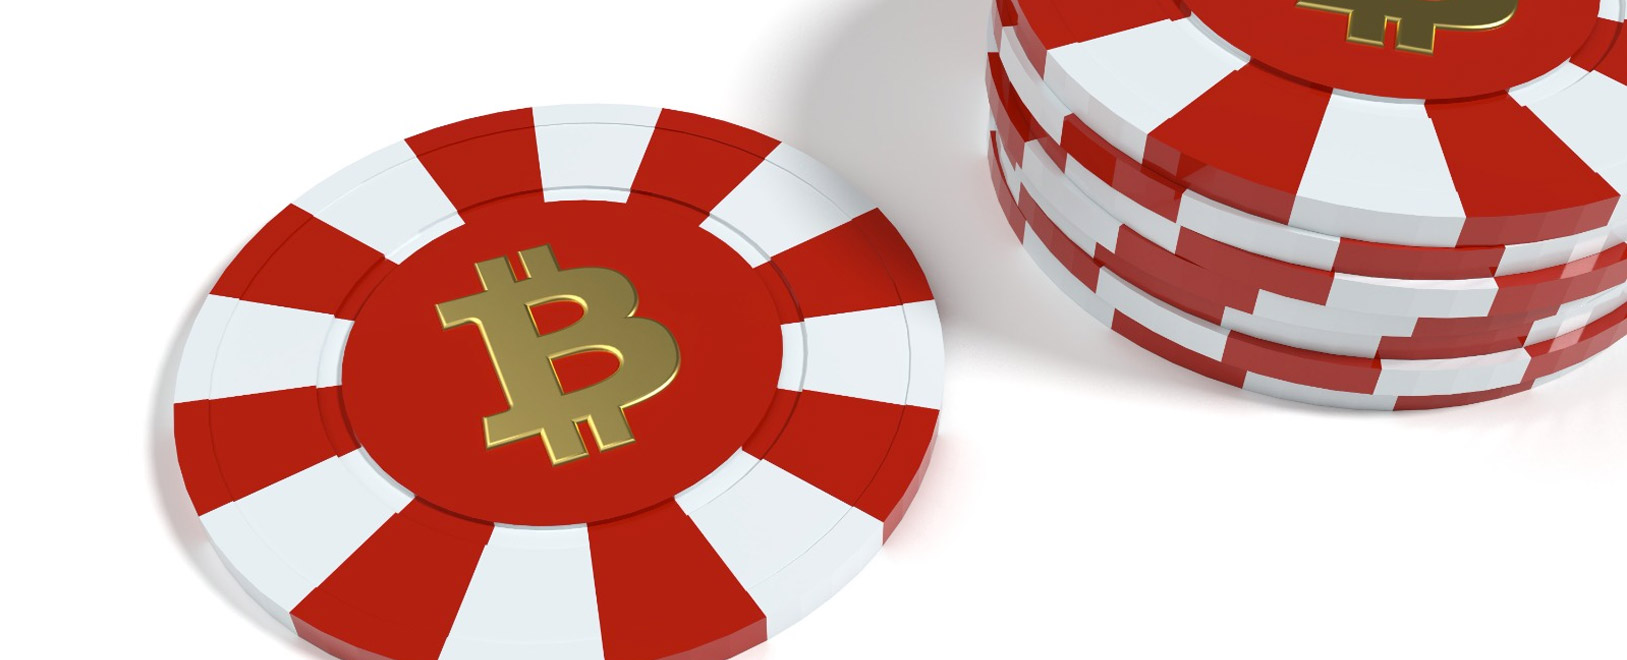 Does ignition poker take bitcoin cash or bitcoin core прогноз на биткоин к рублю сегодня